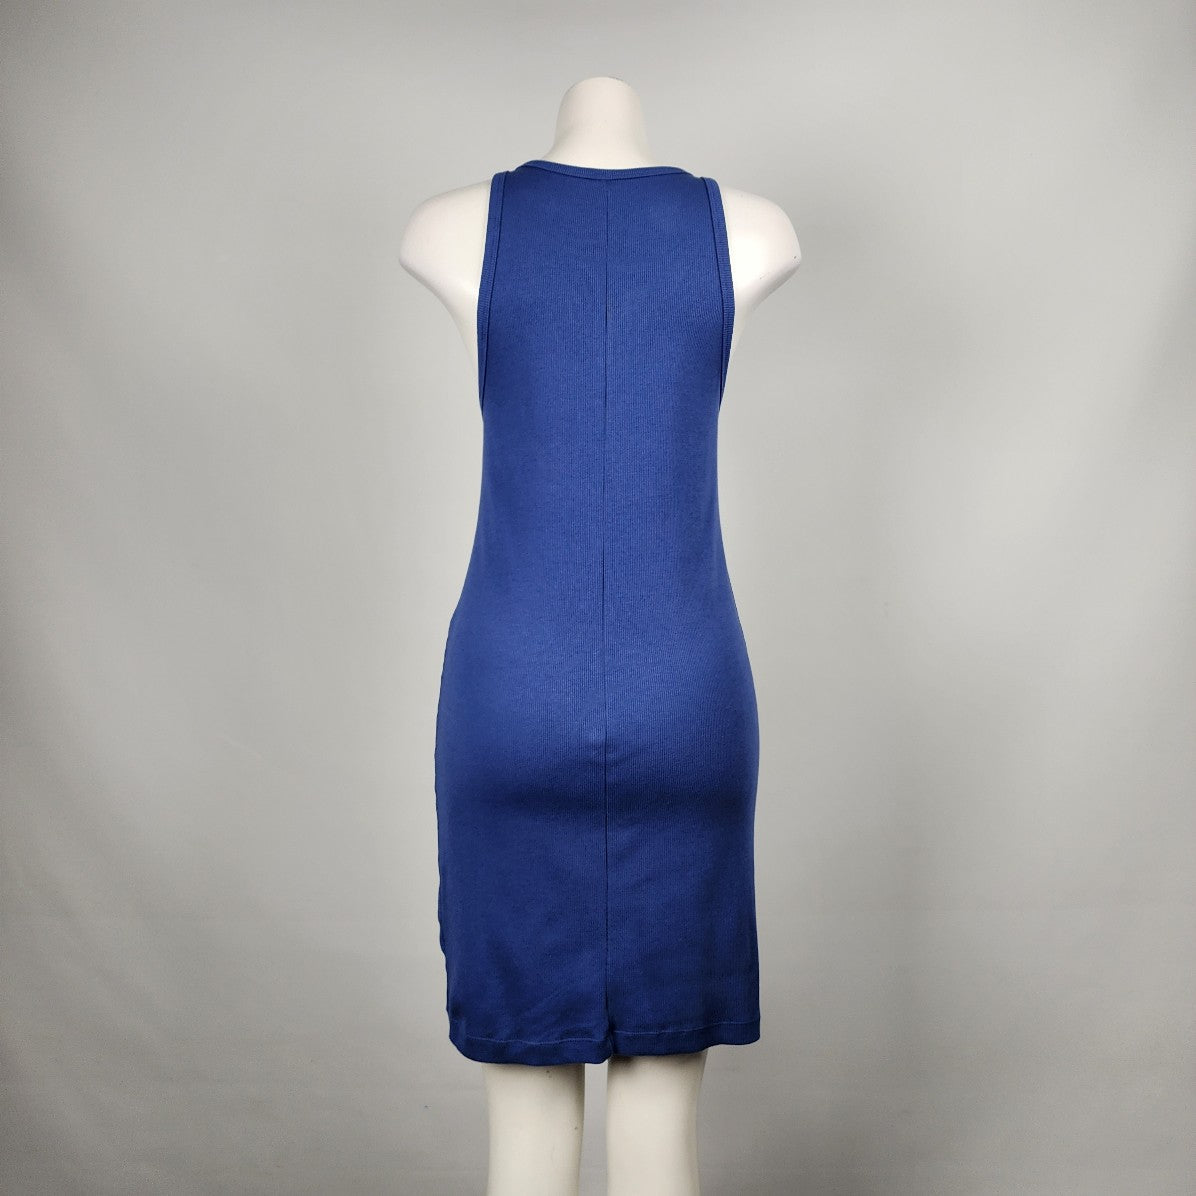 Old Navy Blue Rib Knit Bodycon Dress Size M